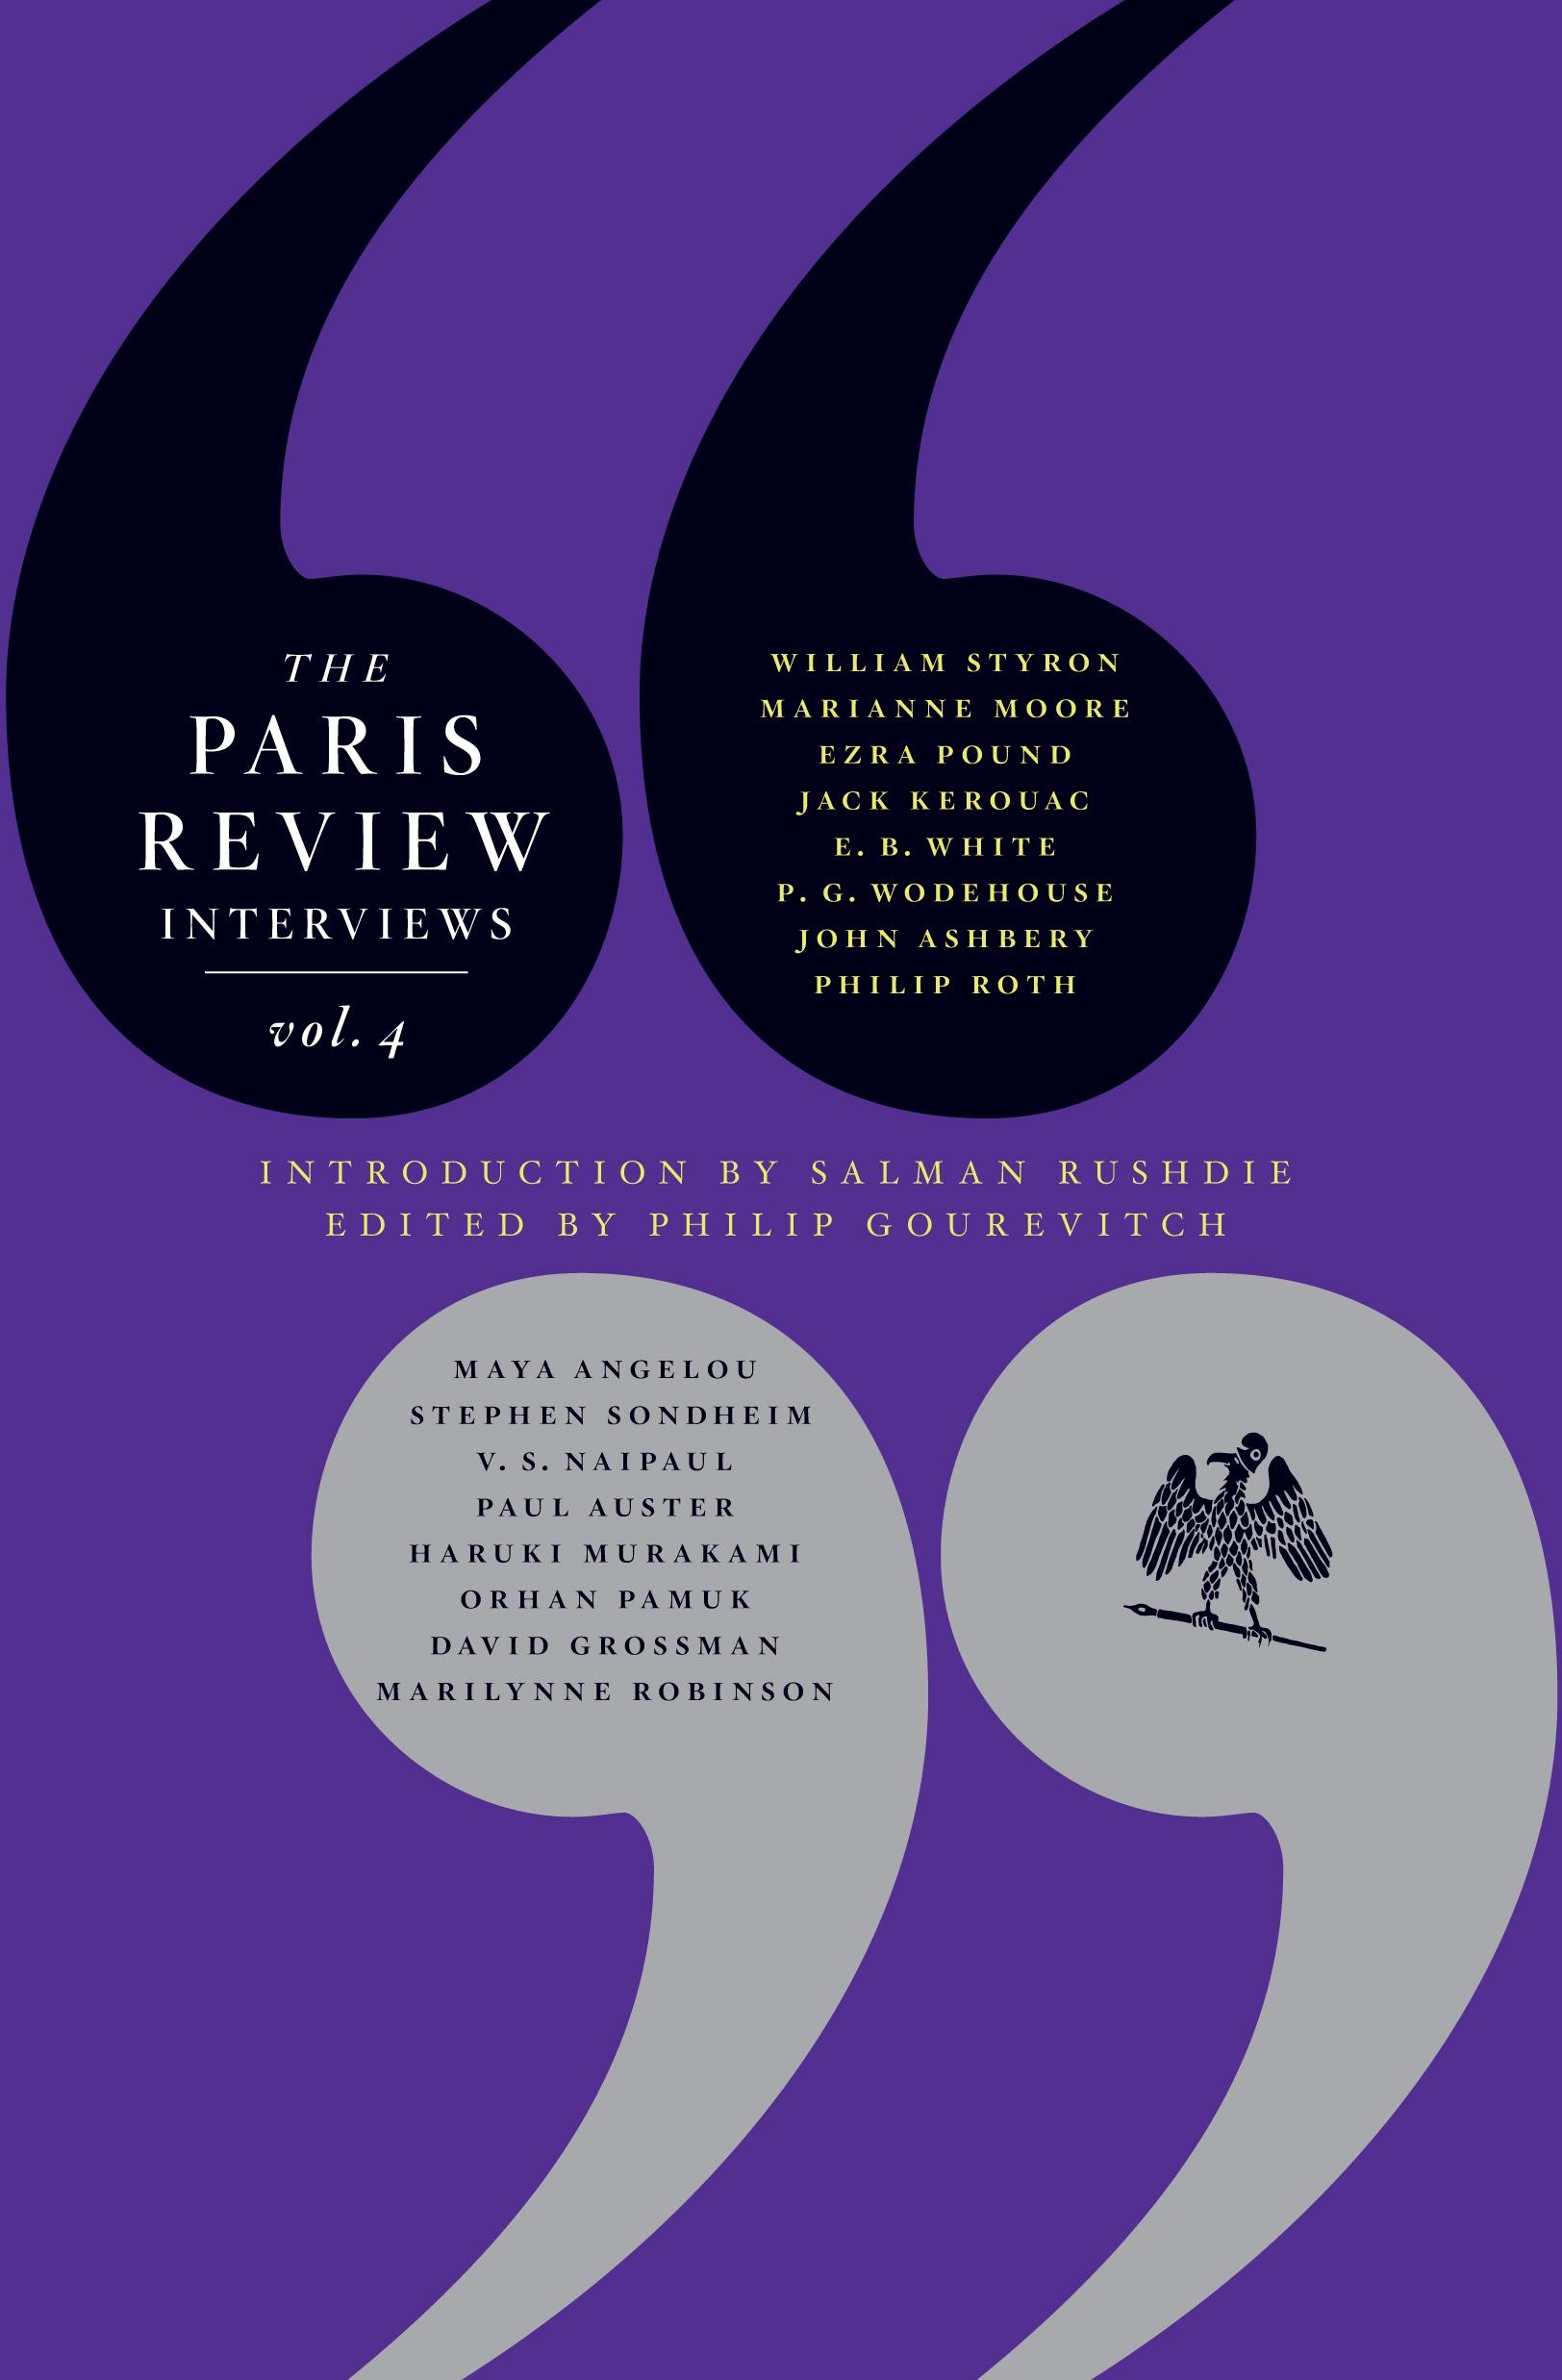 The Paris Review Interviews: Vol. 4 / Philip Gourevitch / Taschenbuch / 496 S. / Englisch / 2009 / Canongate Books / EAN 9781847674494 - Gourevitch, Philip